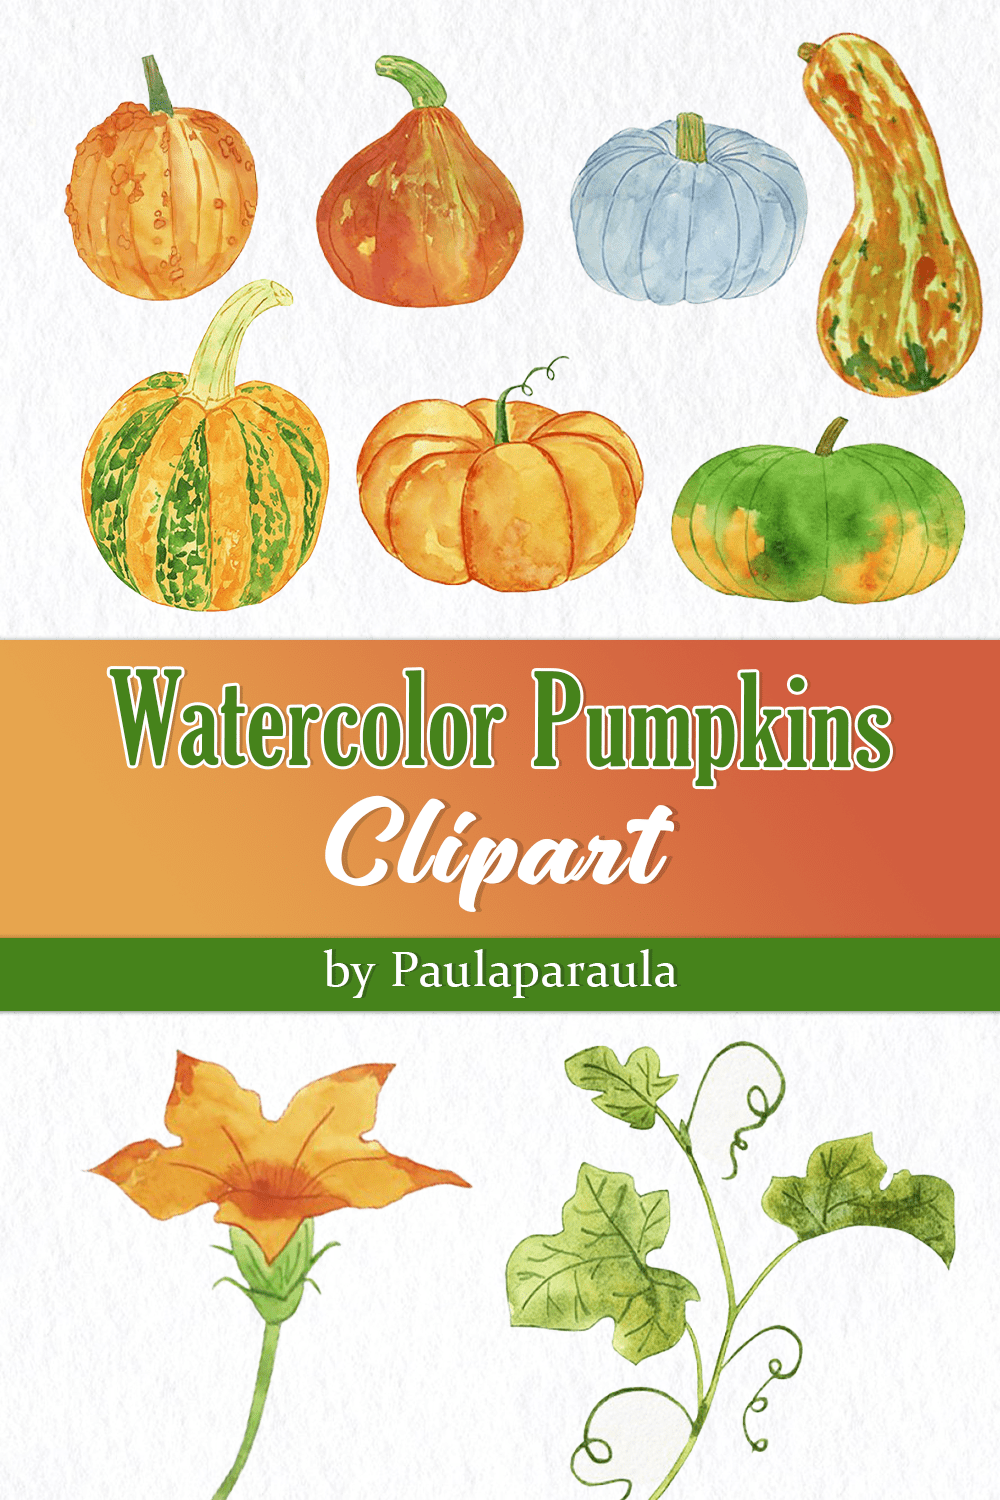 watercolor pumpkins clipart pinterest